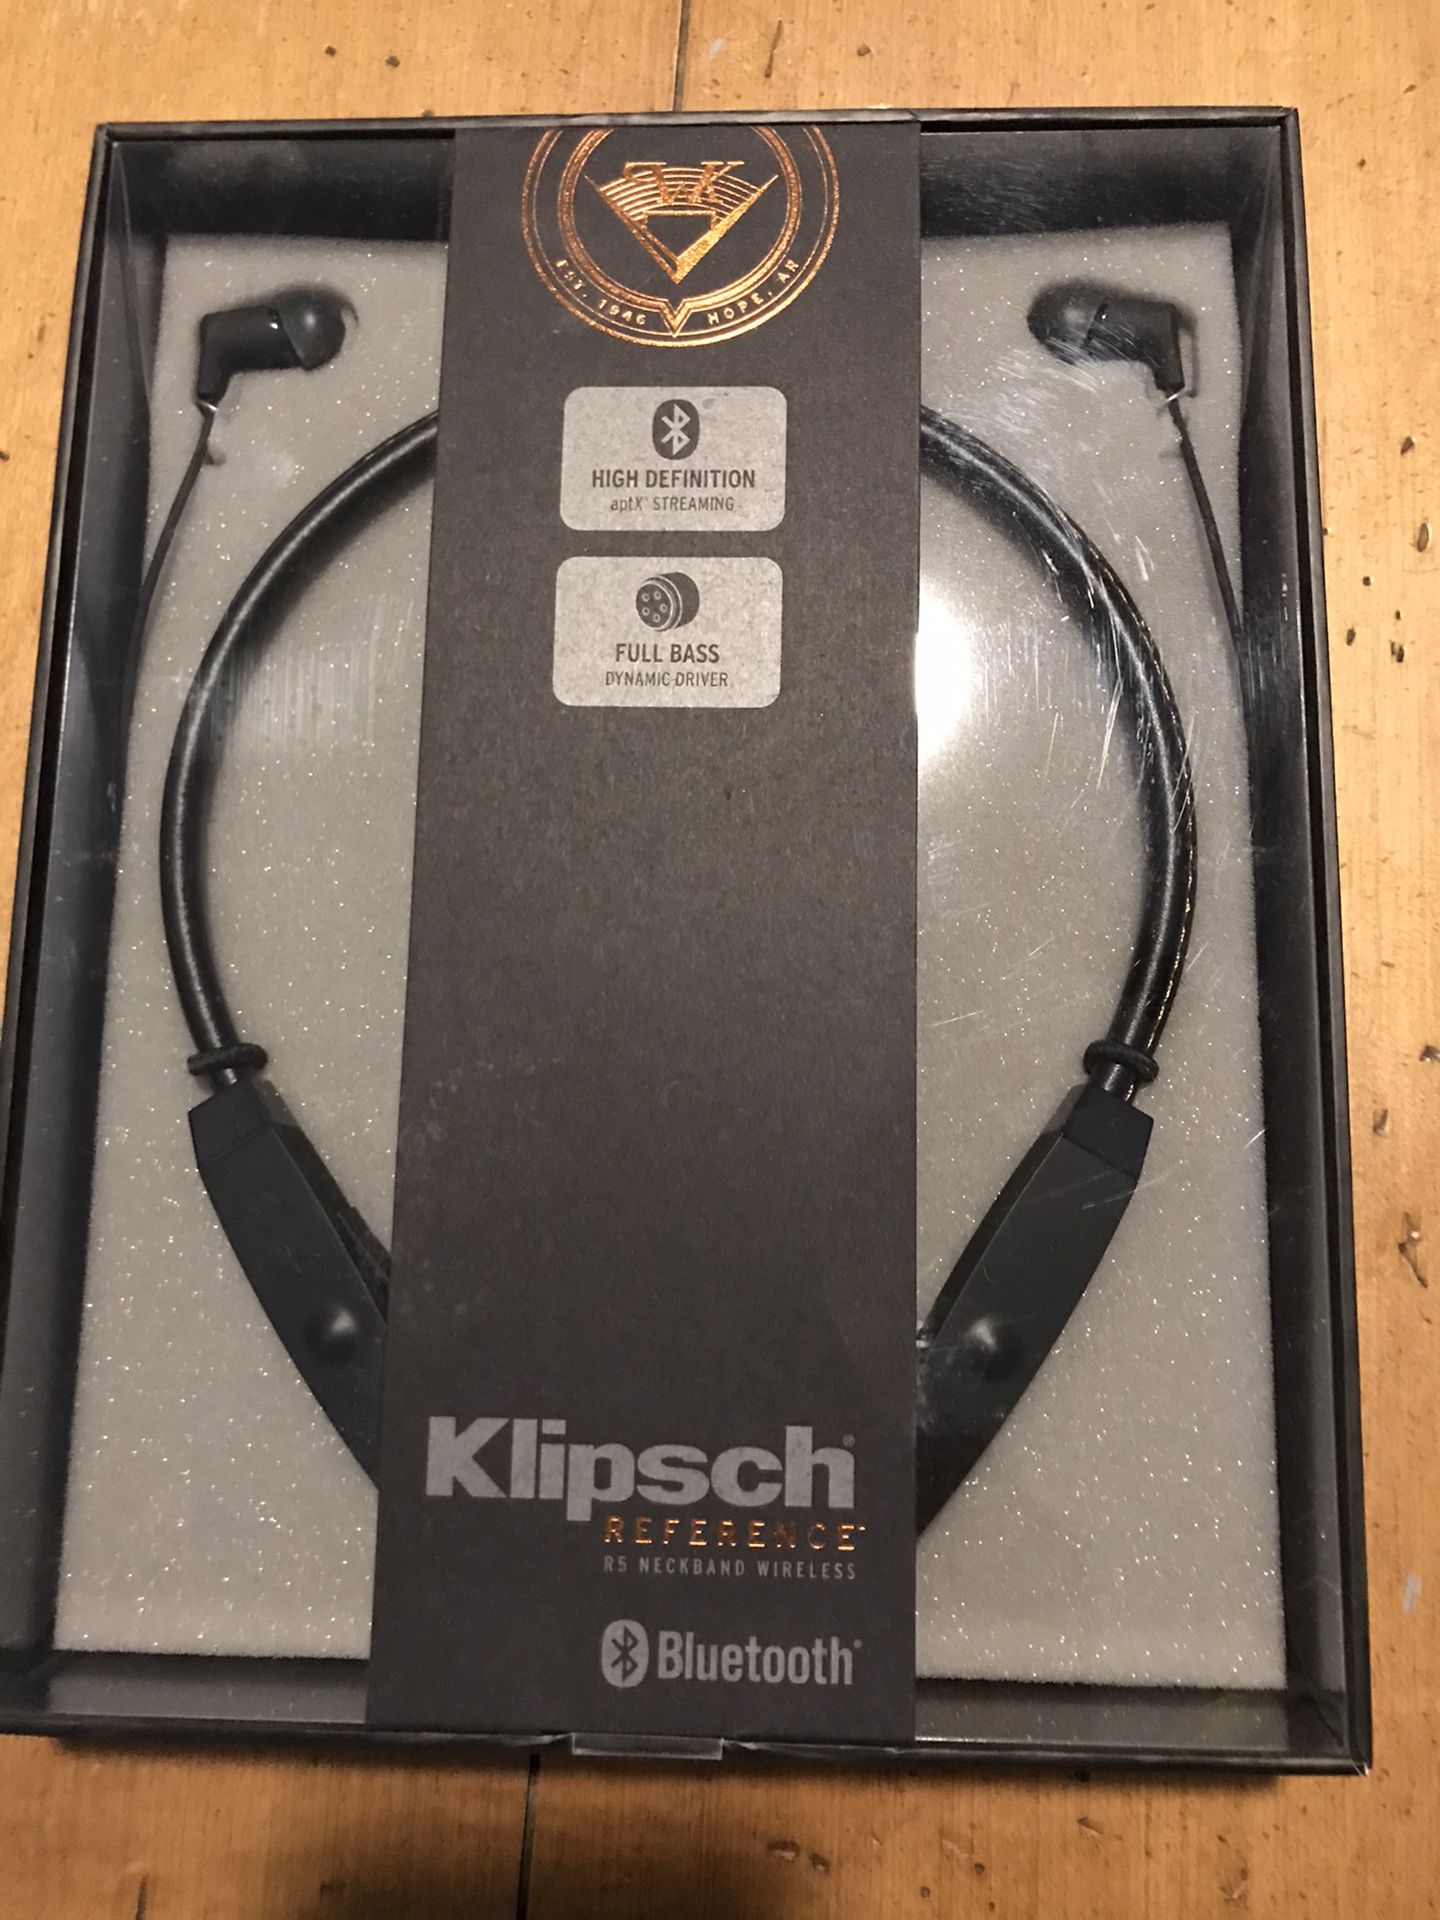 Klipsch reference R5 neck band Bluetooth Headphones